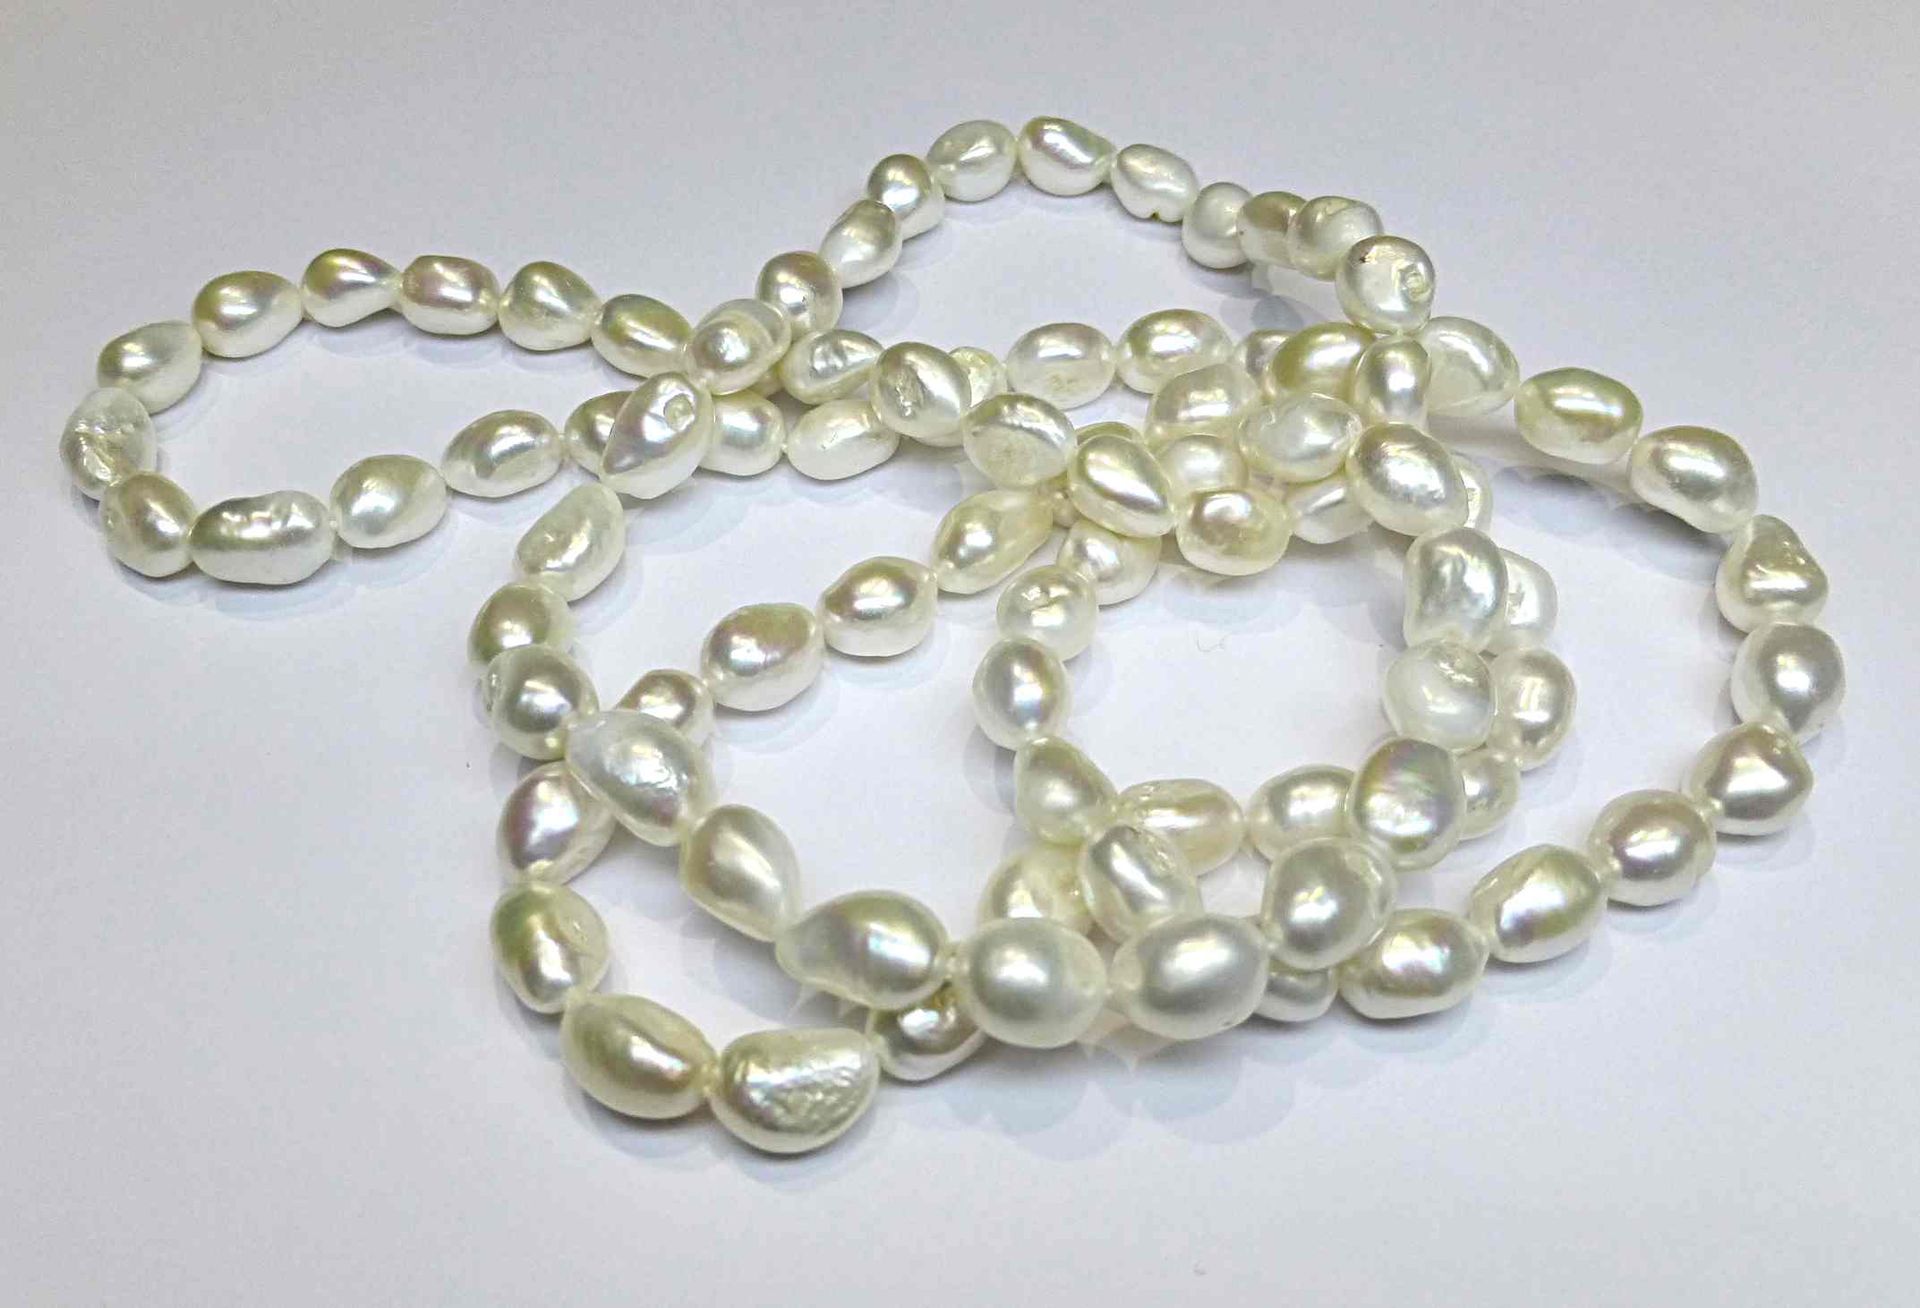 Null 一条非常原始的长项链，由巴洛克形状的天然养殖珍珠制成，长1.60米（每颗珍珠之间有一个结）。